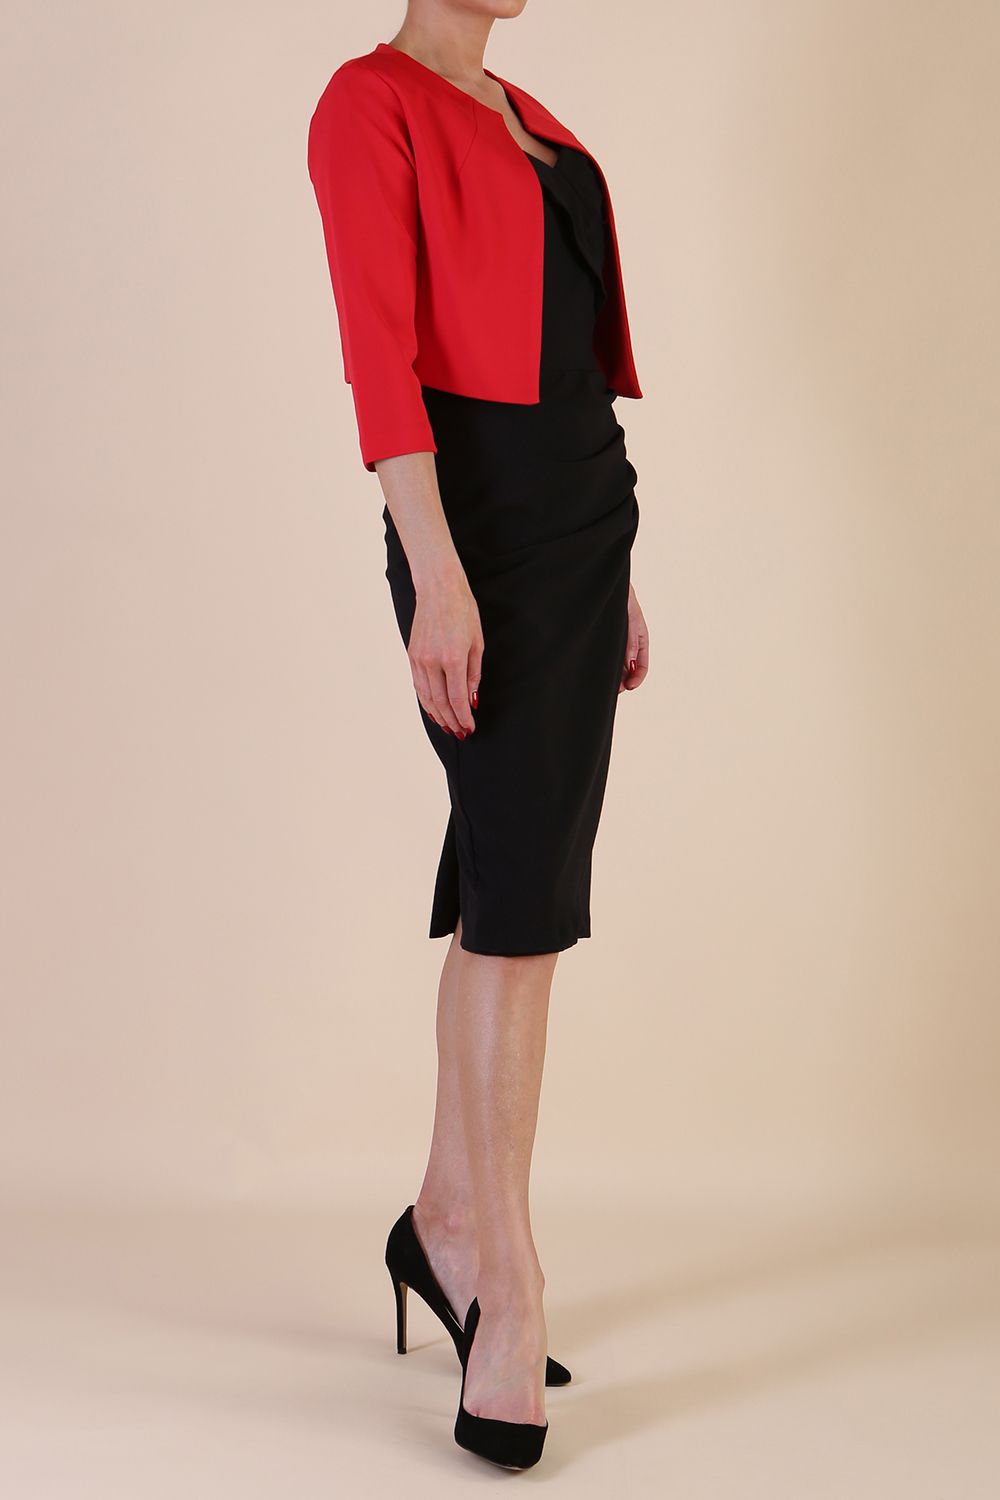 brunette model wearing diva catwalk red sleeved bolero over a printed pencil dress front